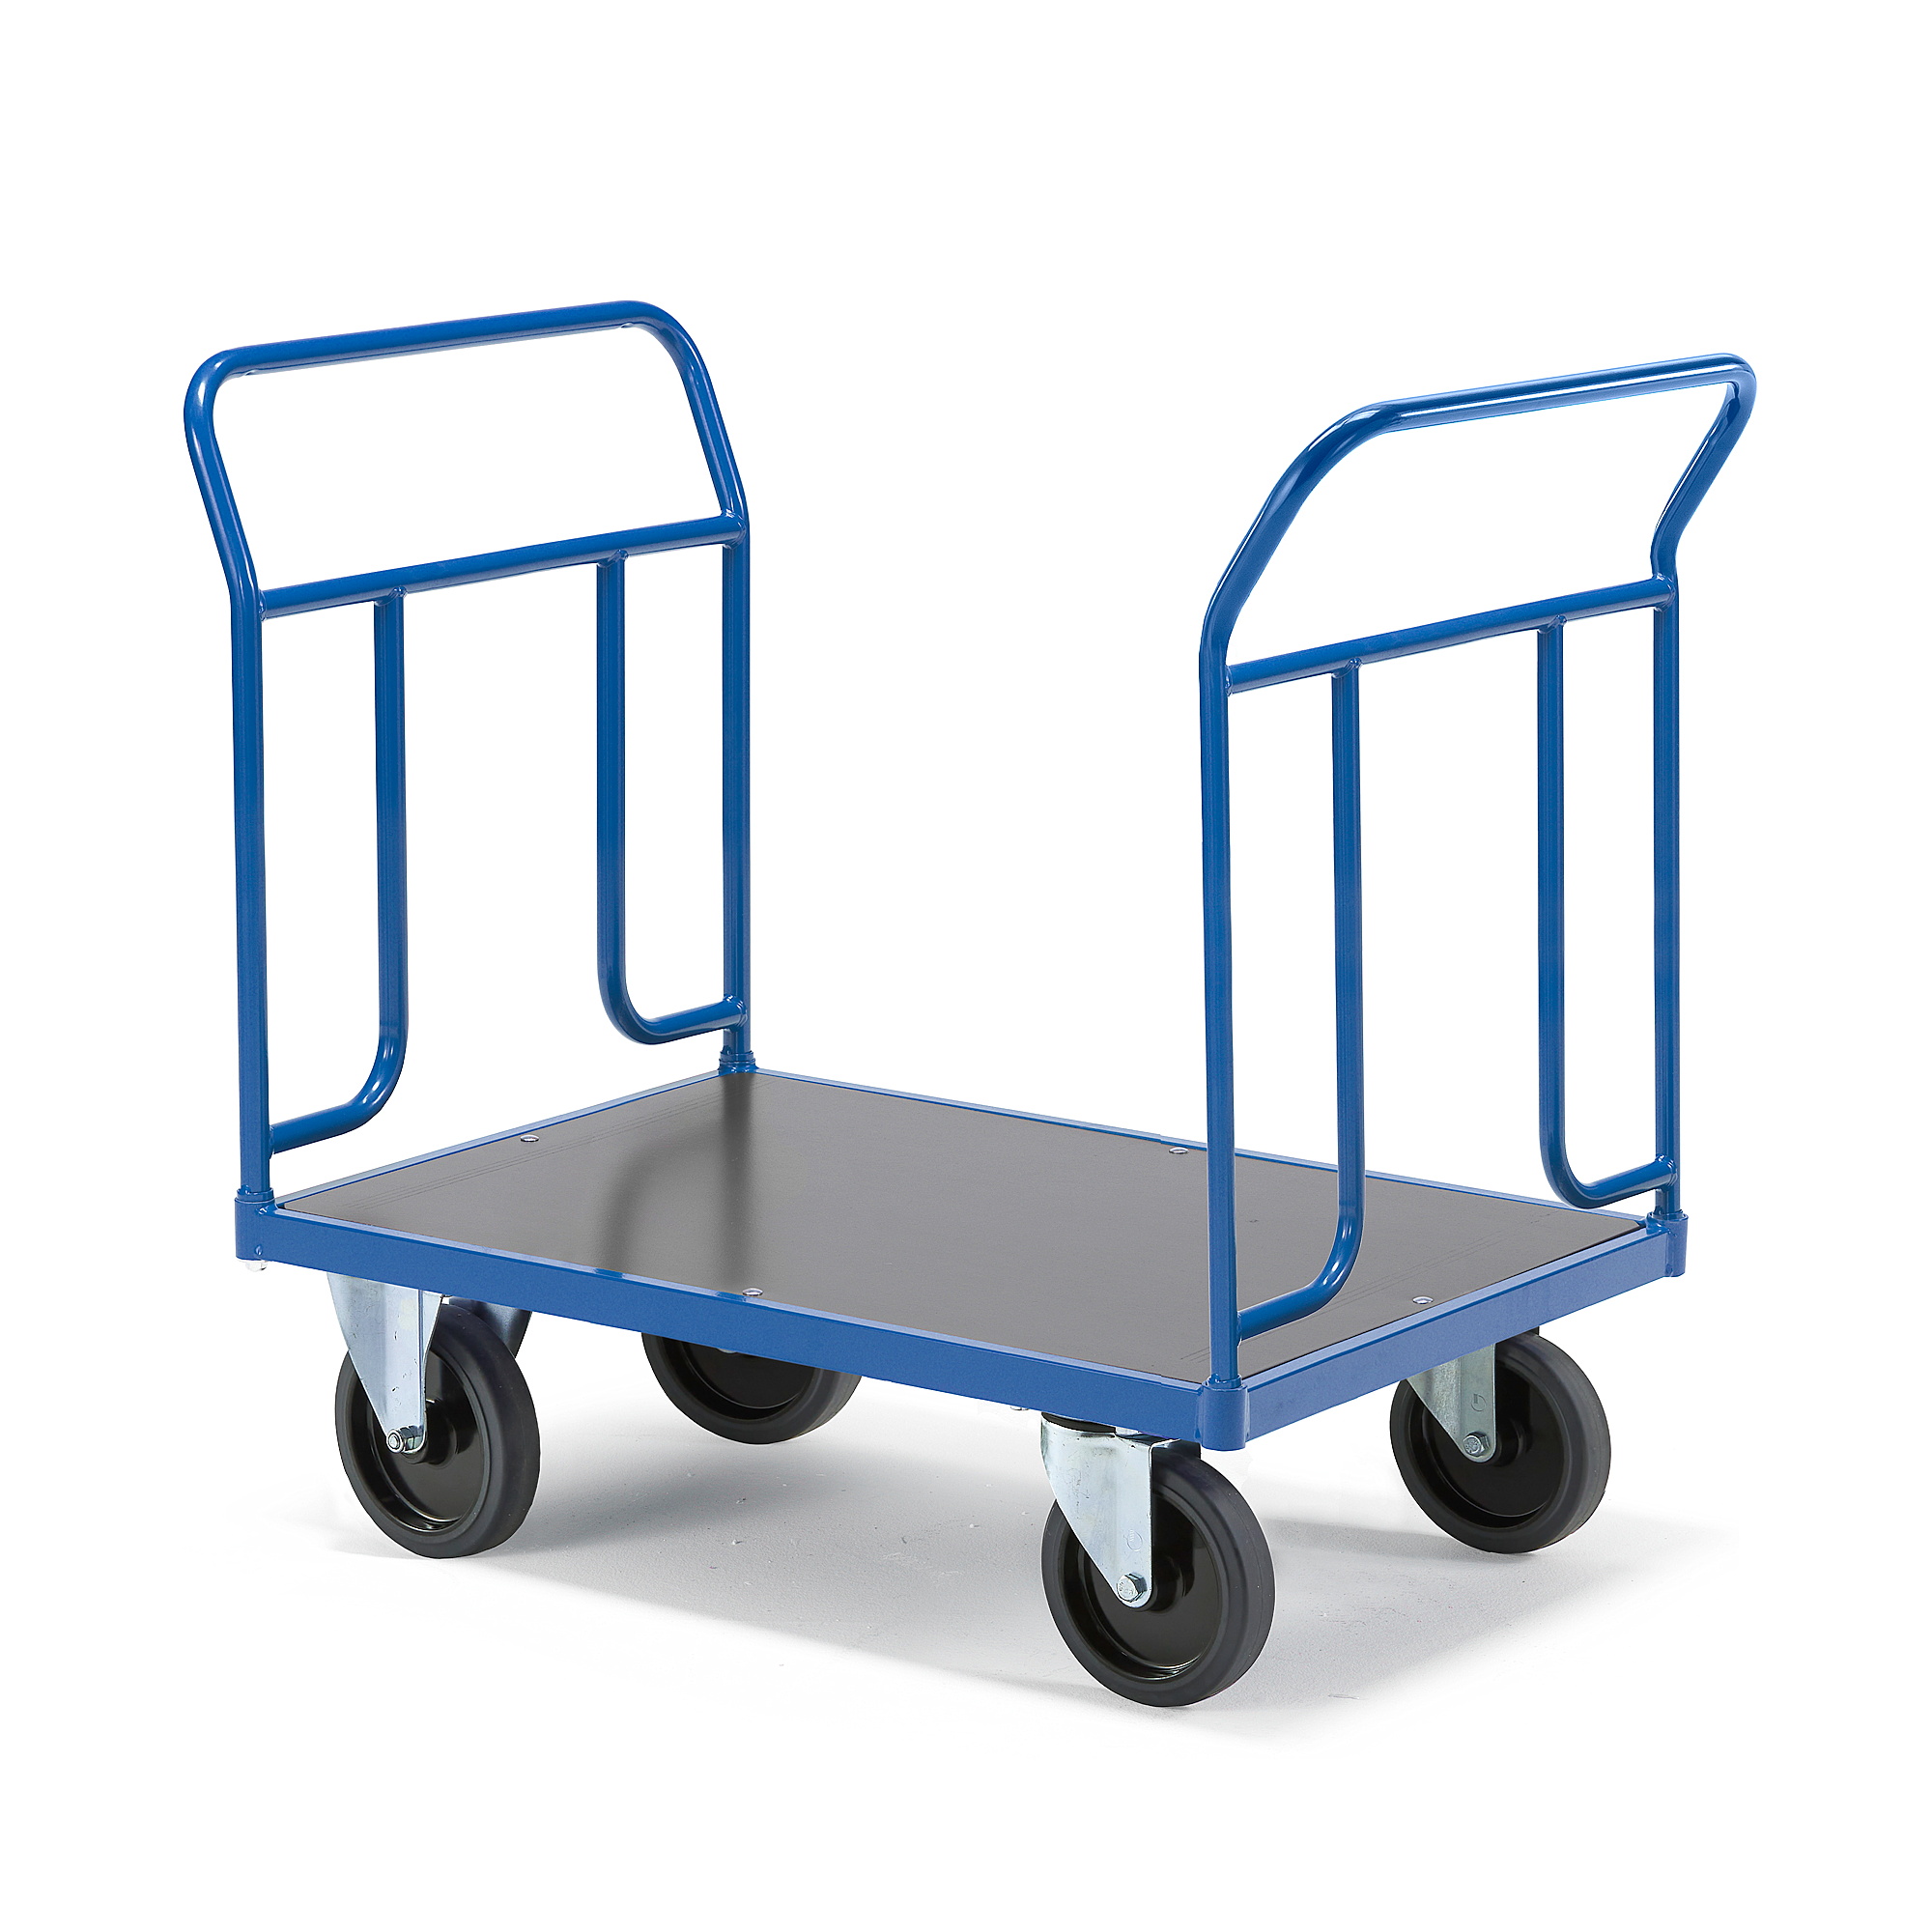 Plošinový vozík TRANSFER, 2 čelní trubkové rámy, 1000x700 mm, 1000 kg, elastická gumová kola, bez br